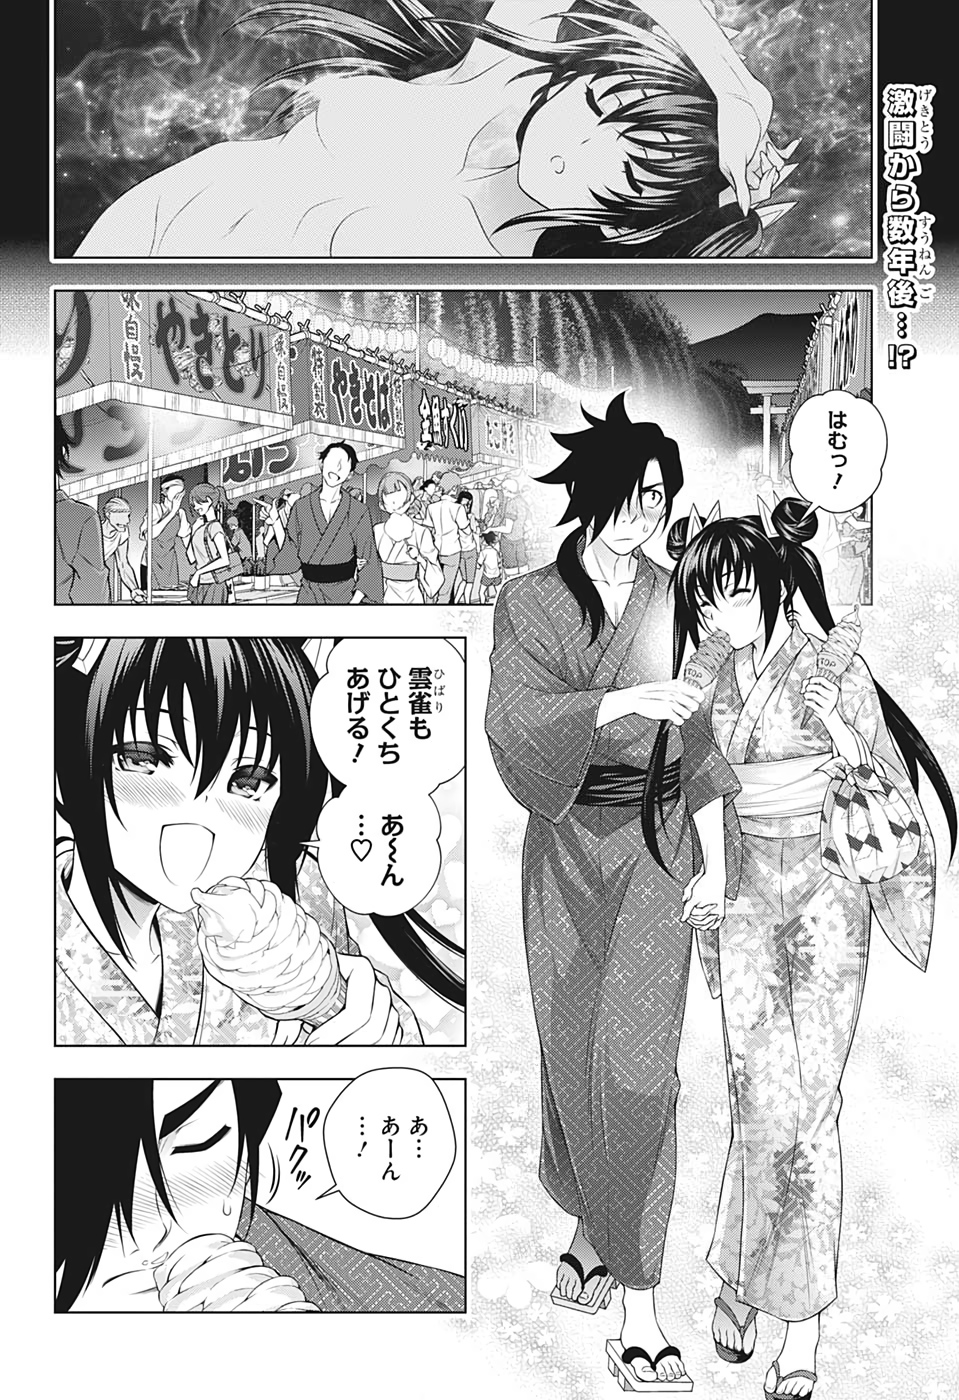 Yuragi-sou no Yuuna-san - ゆらぎ荘の幽奈さん - Chapter 196 - Page 2